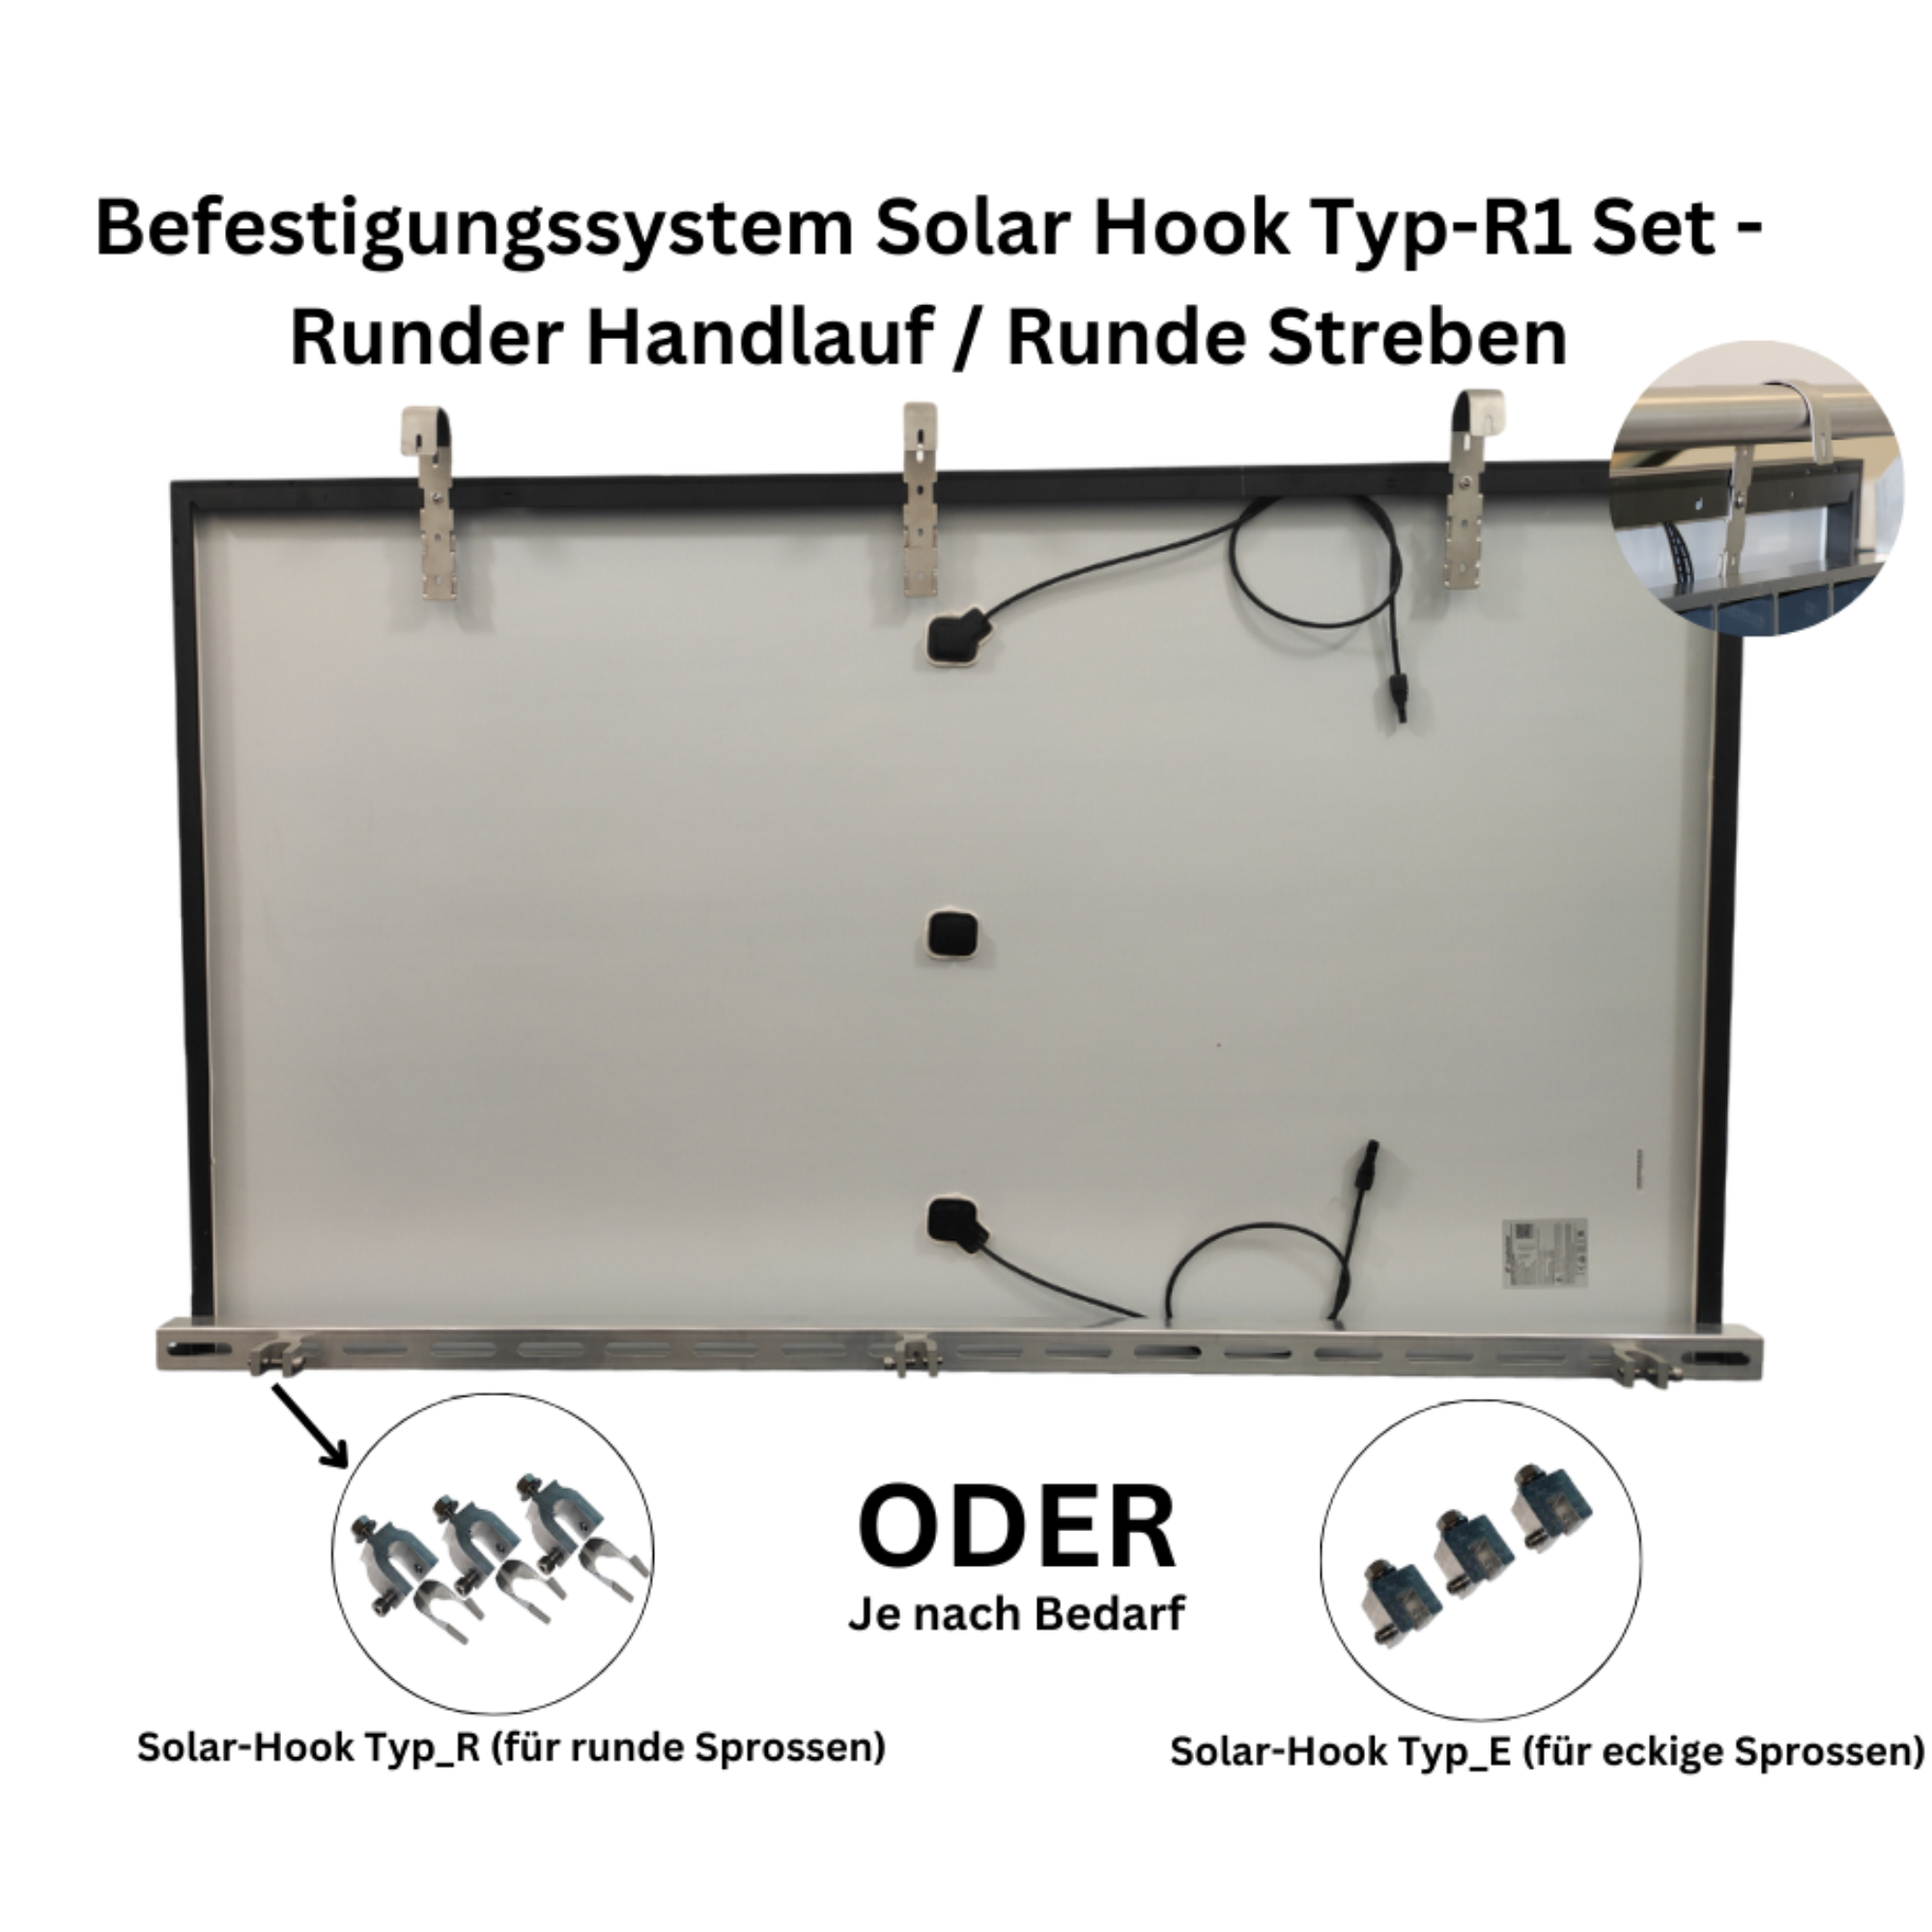 Befestigungssystem Solar Hook Typ-R1